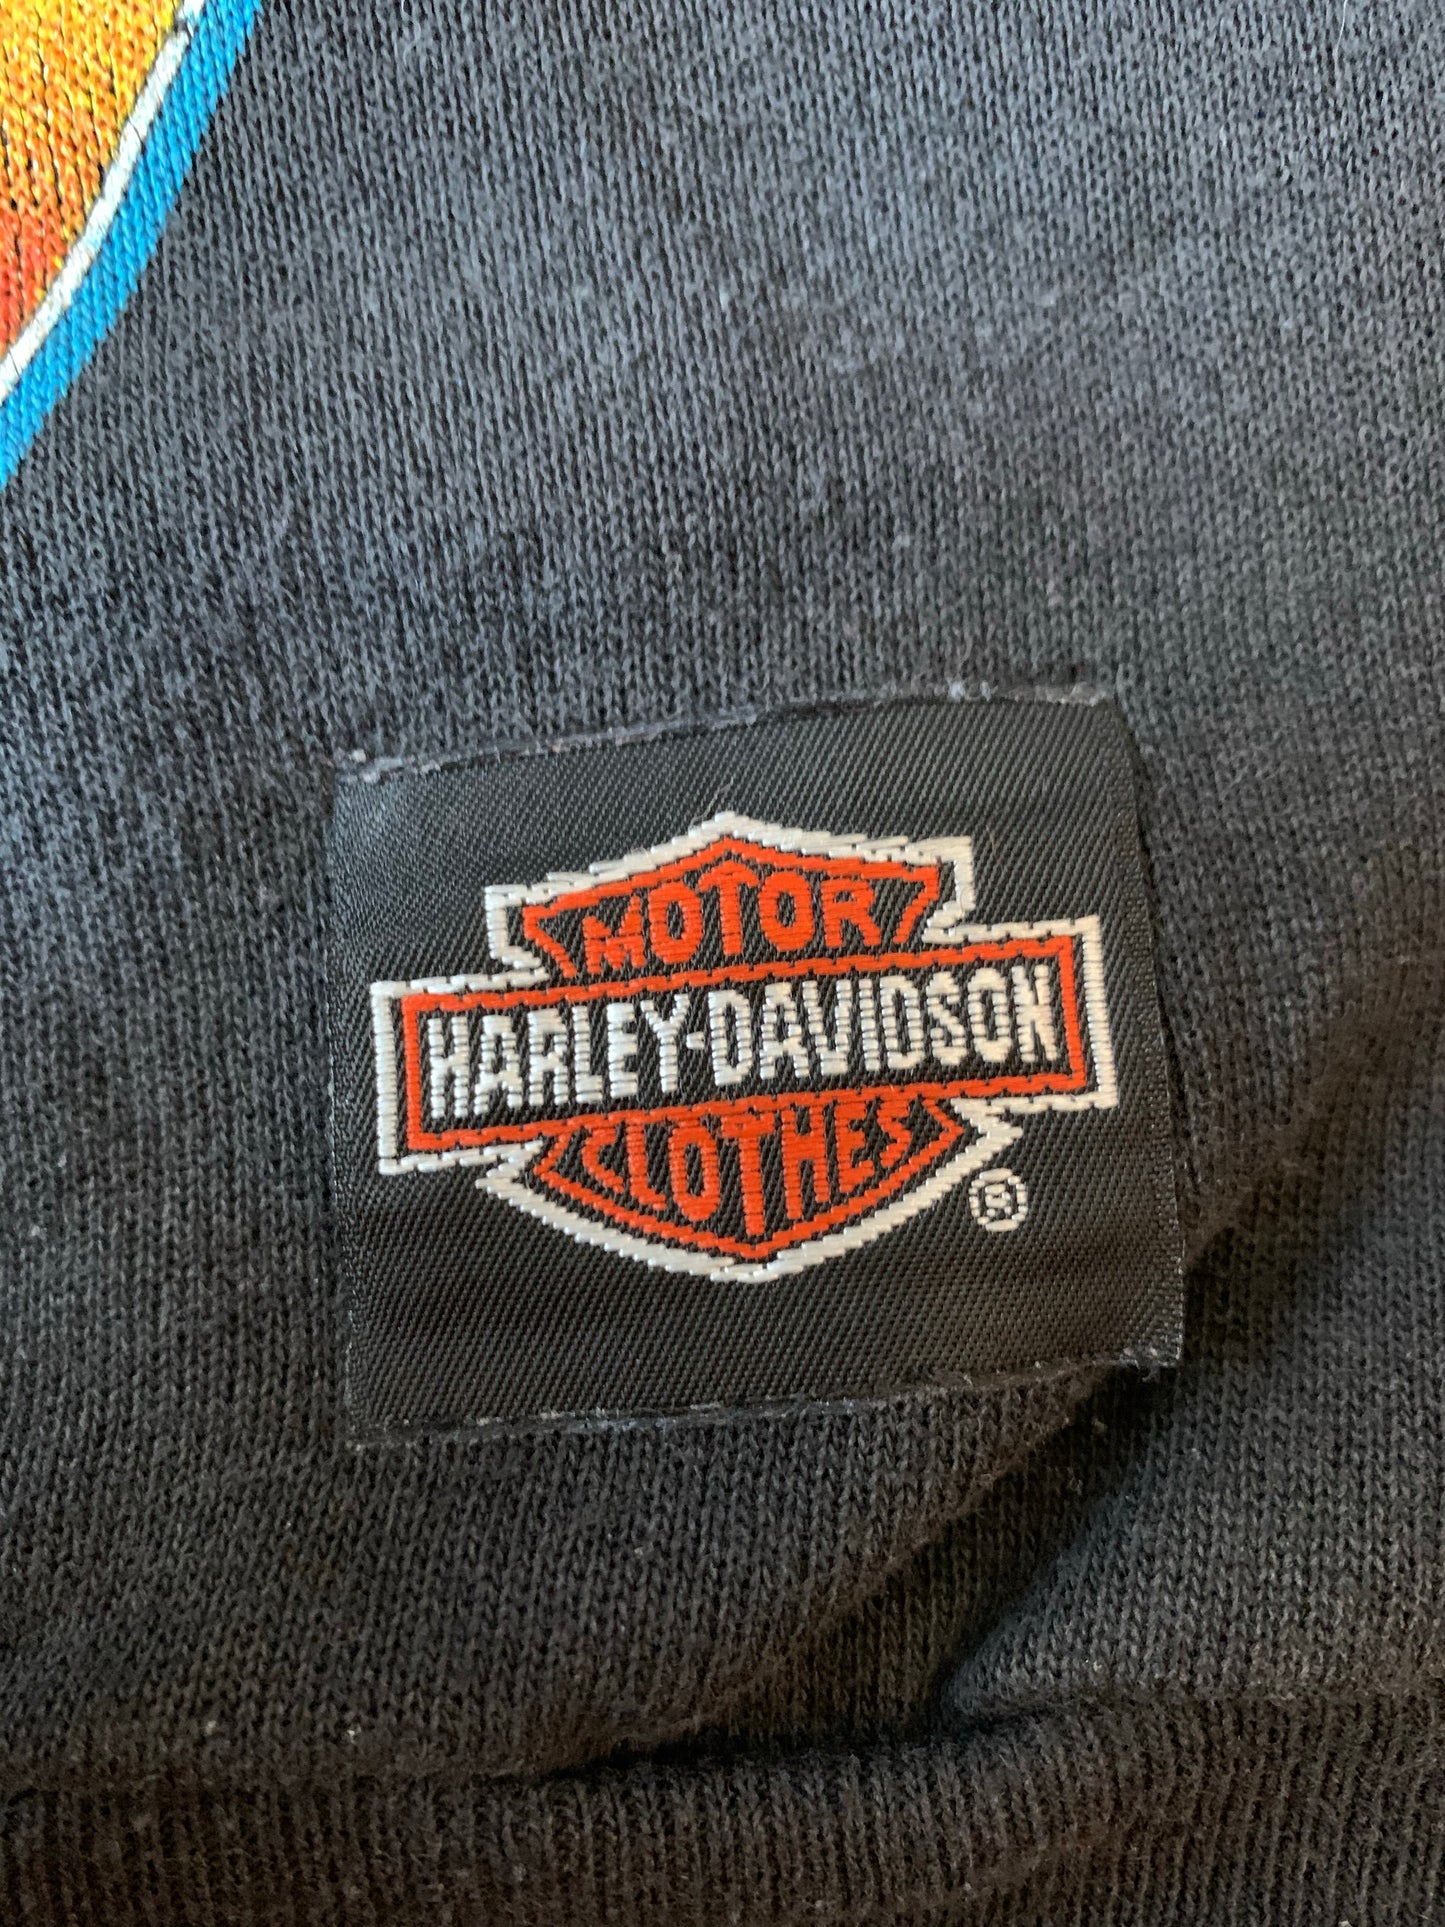 Vintage 1990 Harley-Davidson Built Tough Sweatshirt